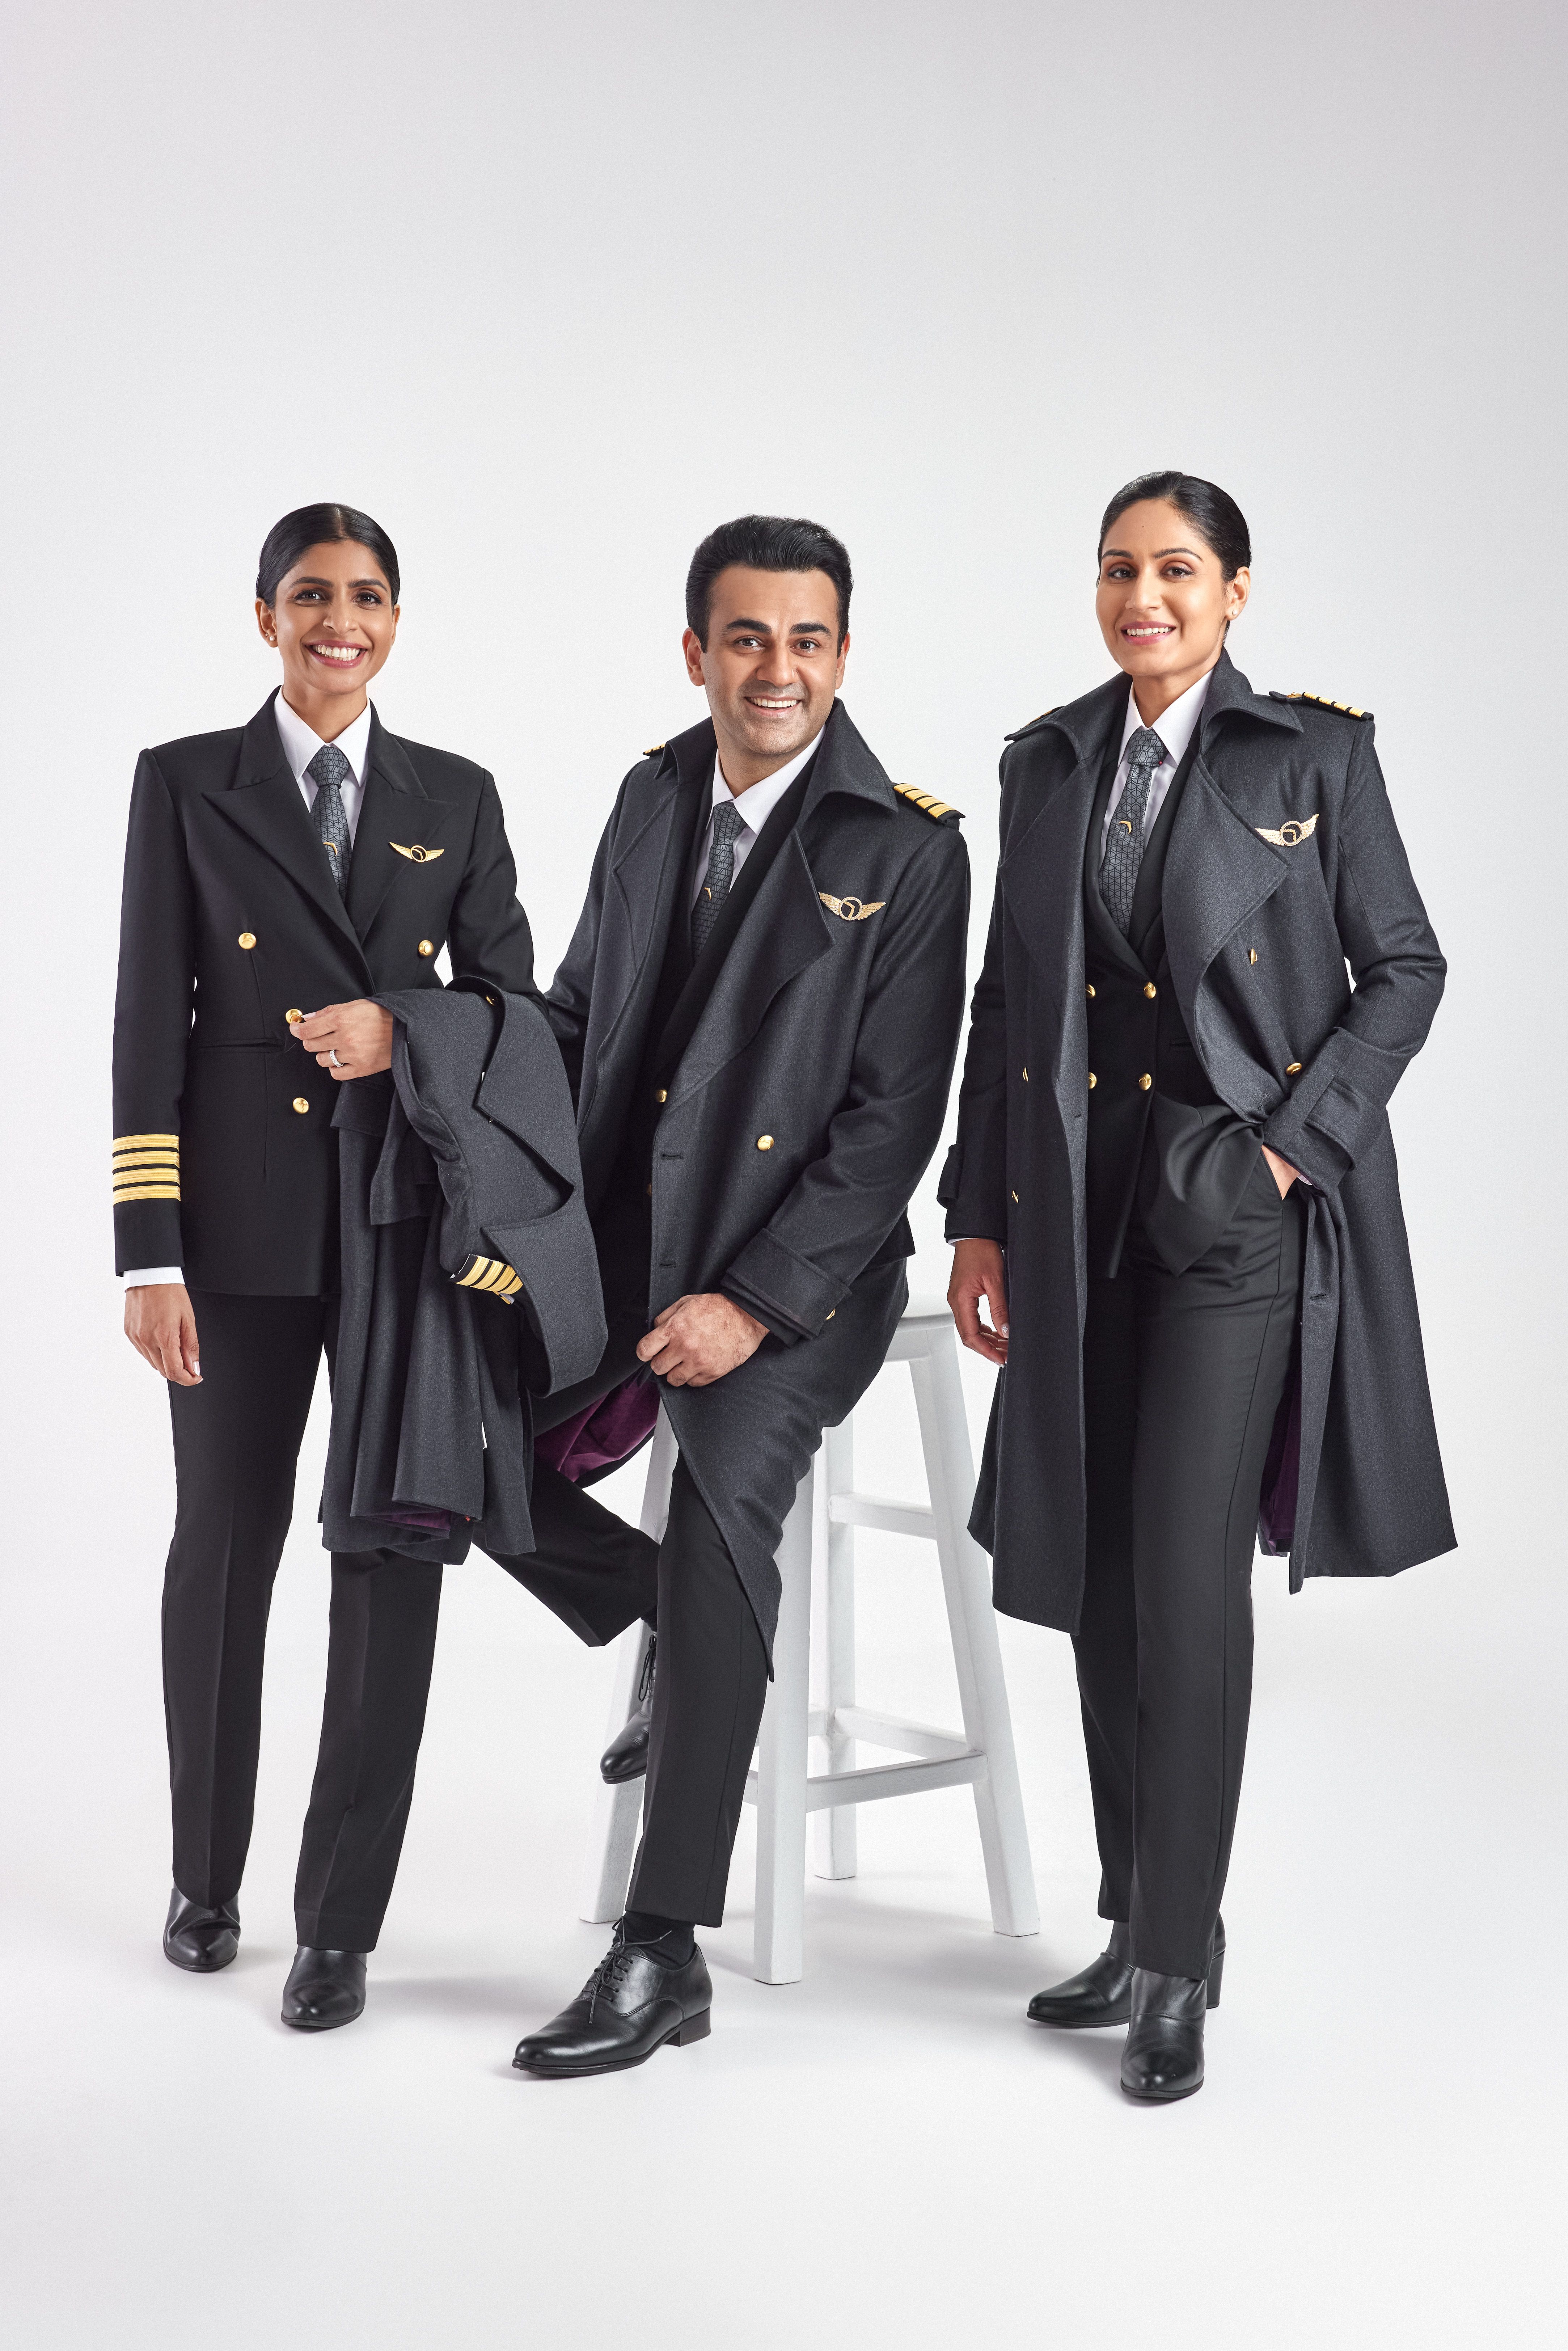 Air India pilot uniforms winter